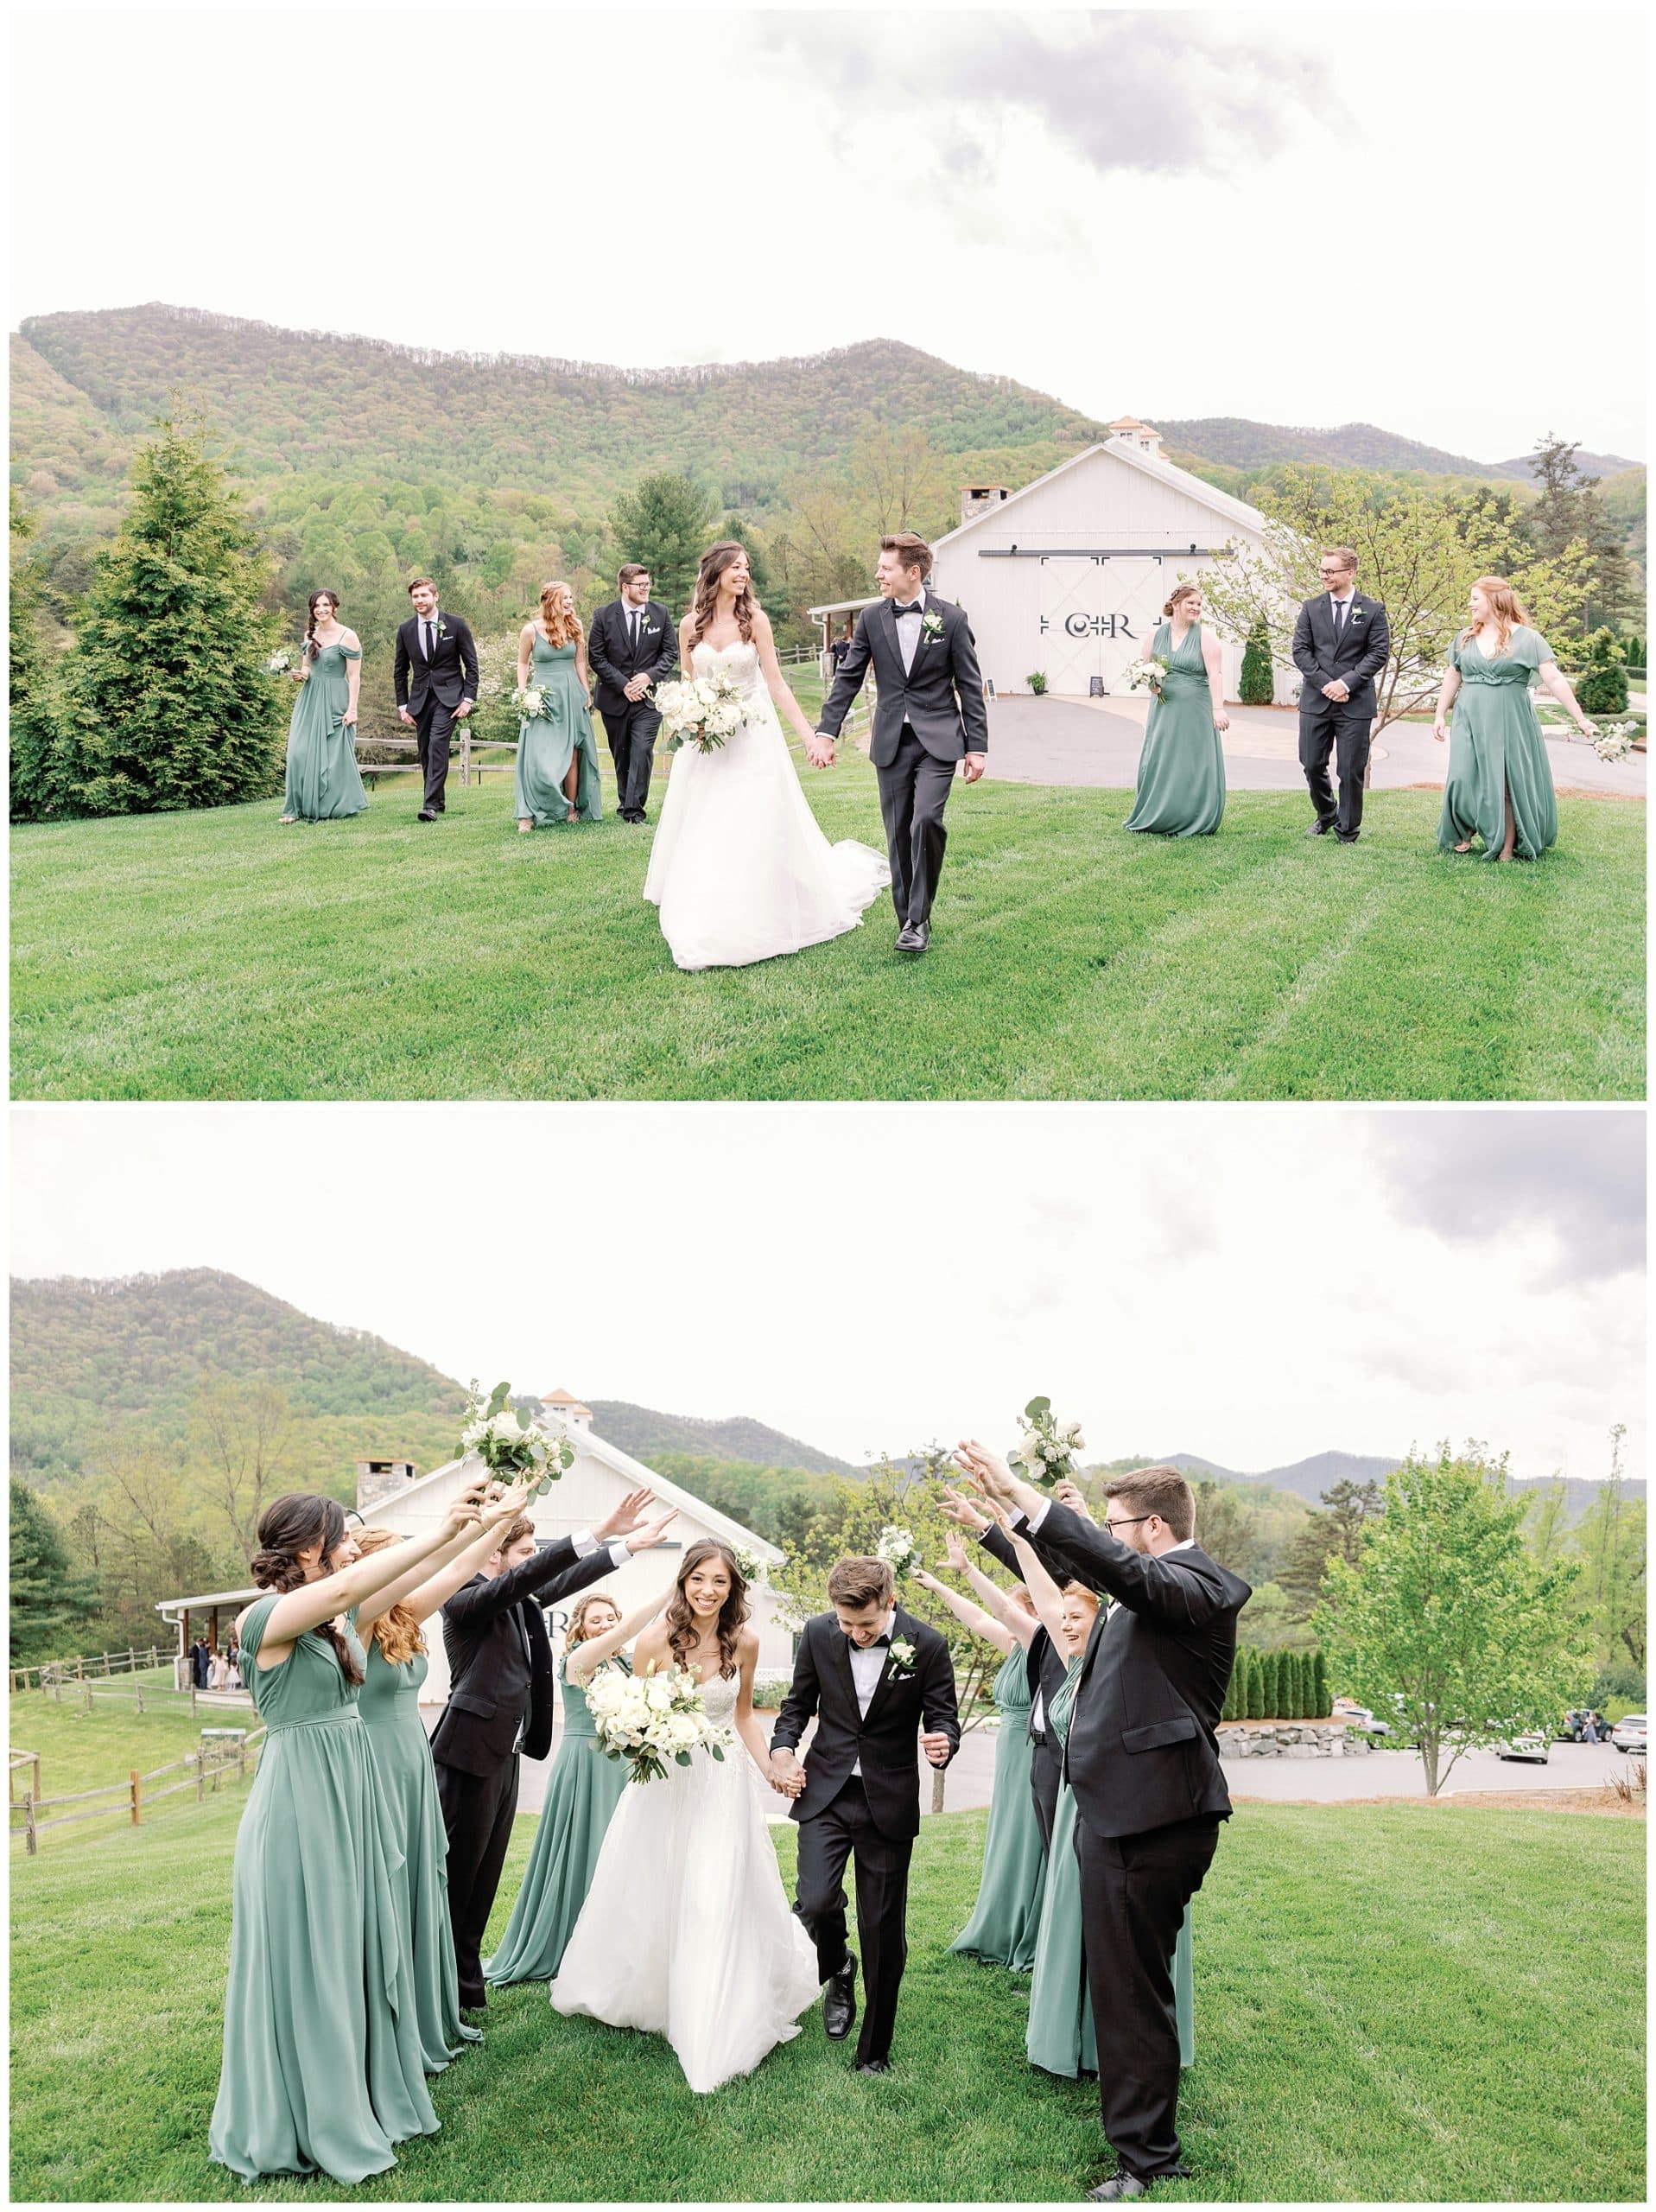 fun wedding party photos at Chestnut Ridge Wedding venue in Asheville